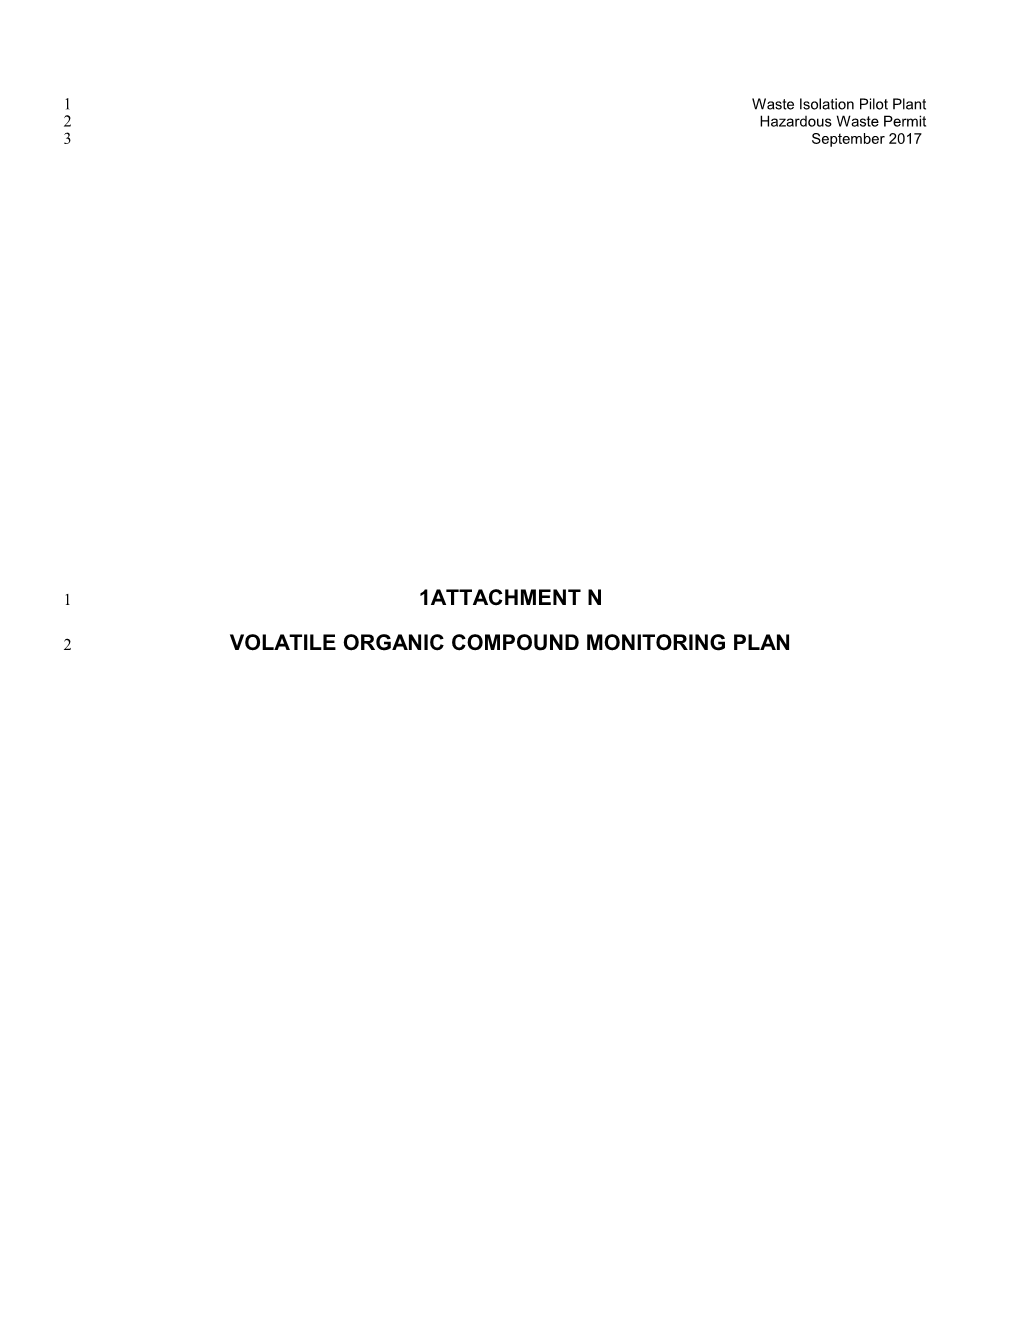 Volatile Organic Compound Monitoring Plan